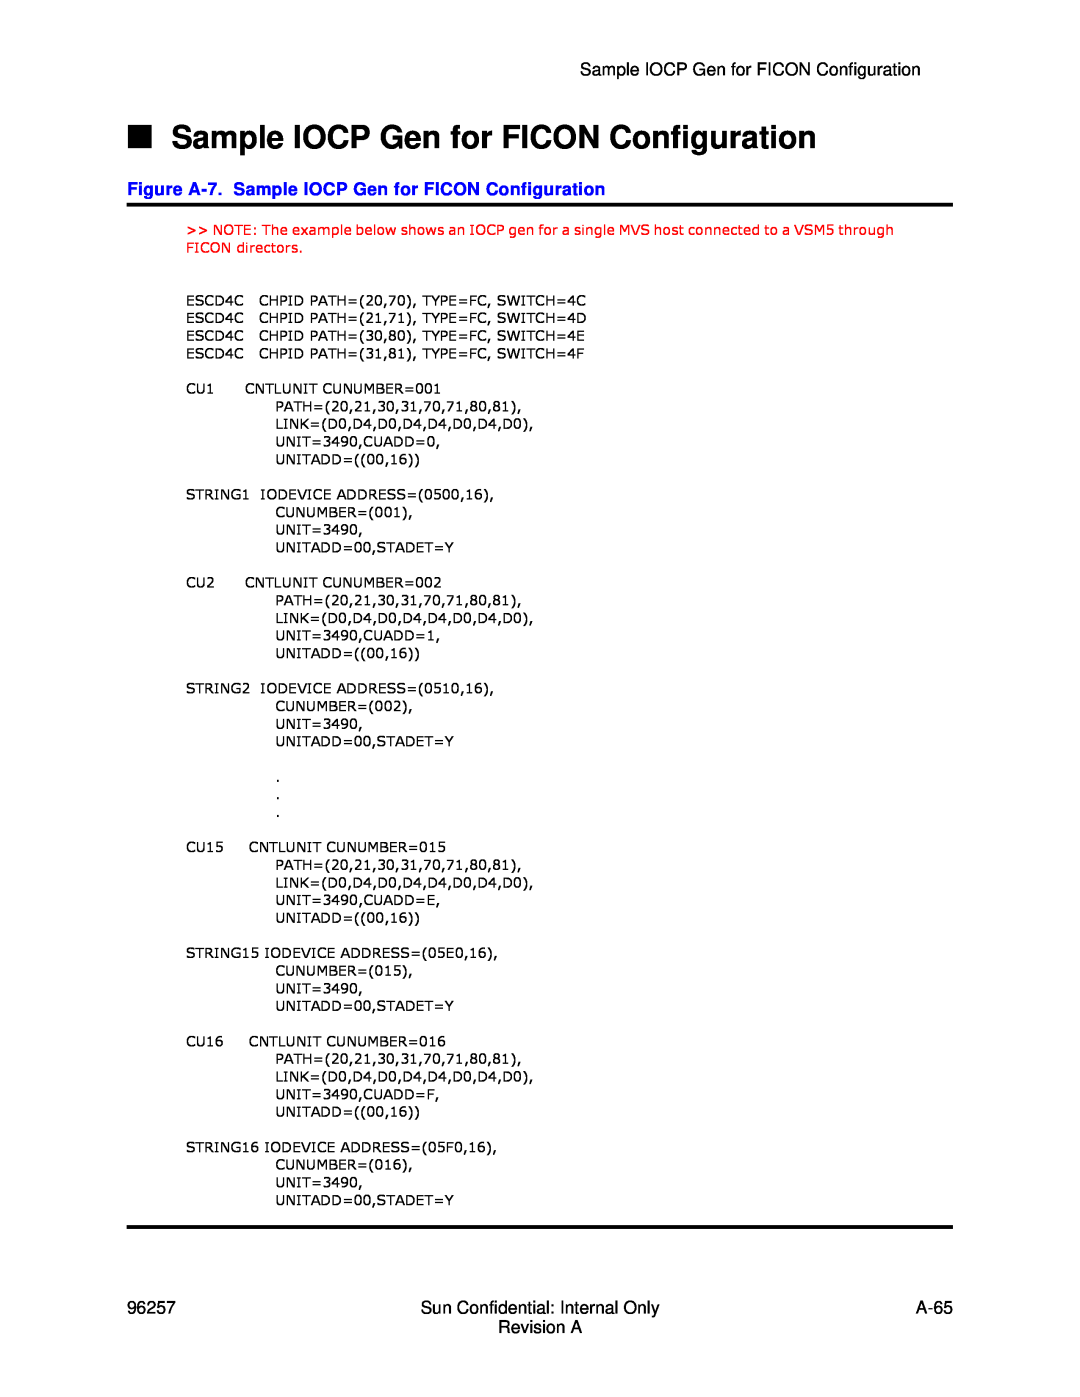 Sun Microsystems 96257 manual Figure A-7. Sample IOCP Gen for FICON Configuration 